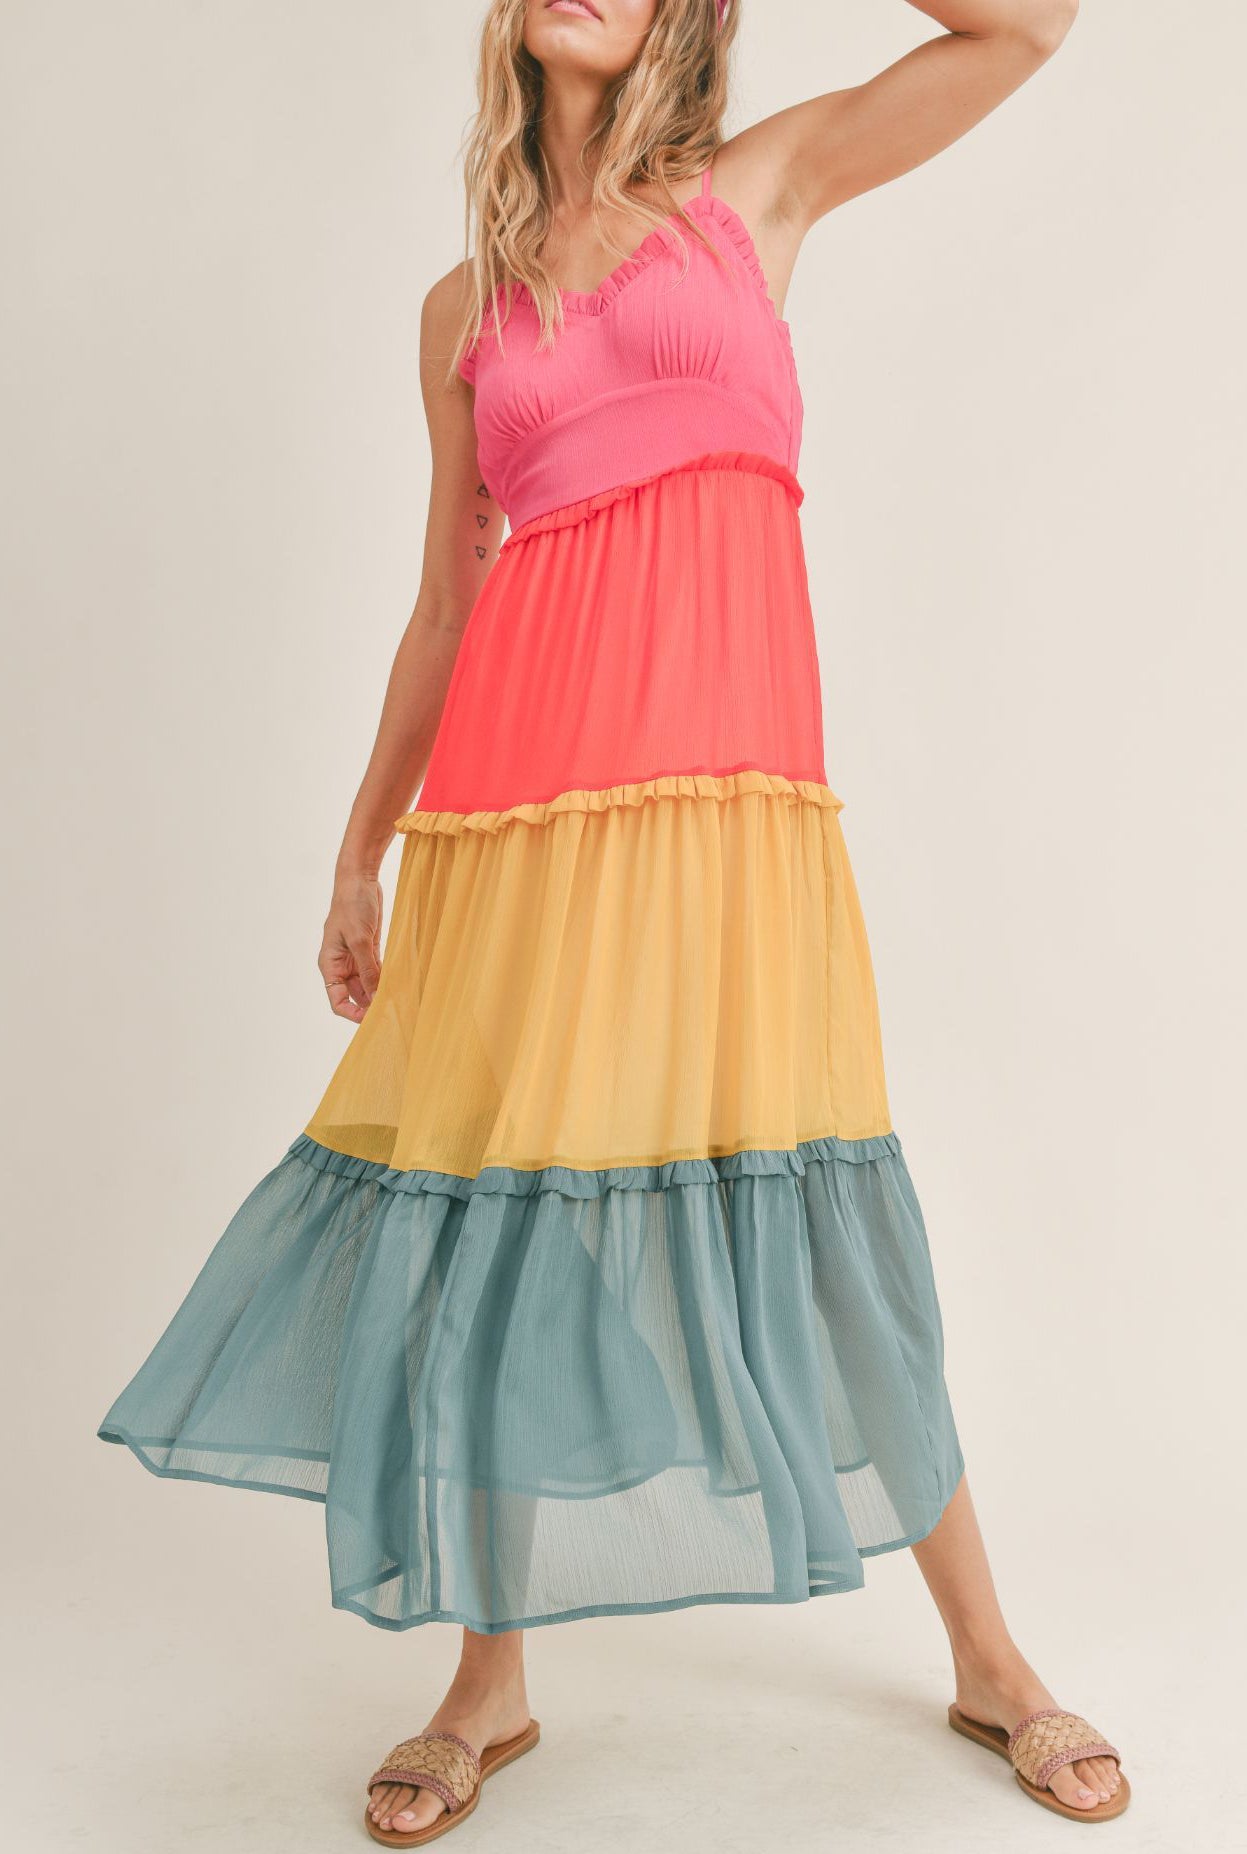 Colorful Life Midi Dress